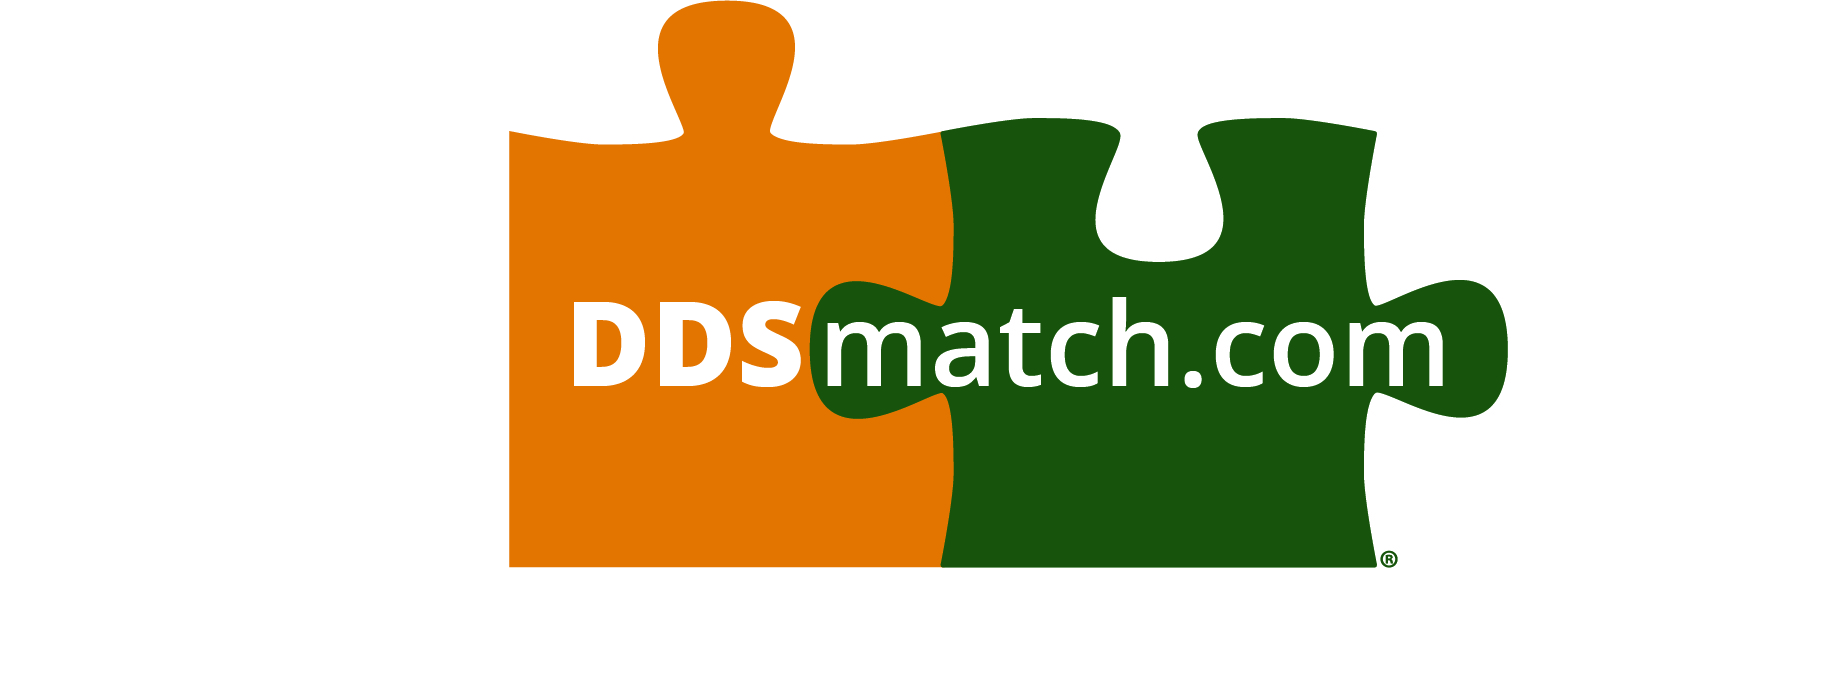 ddsmatch.com - Jason Owens Logo